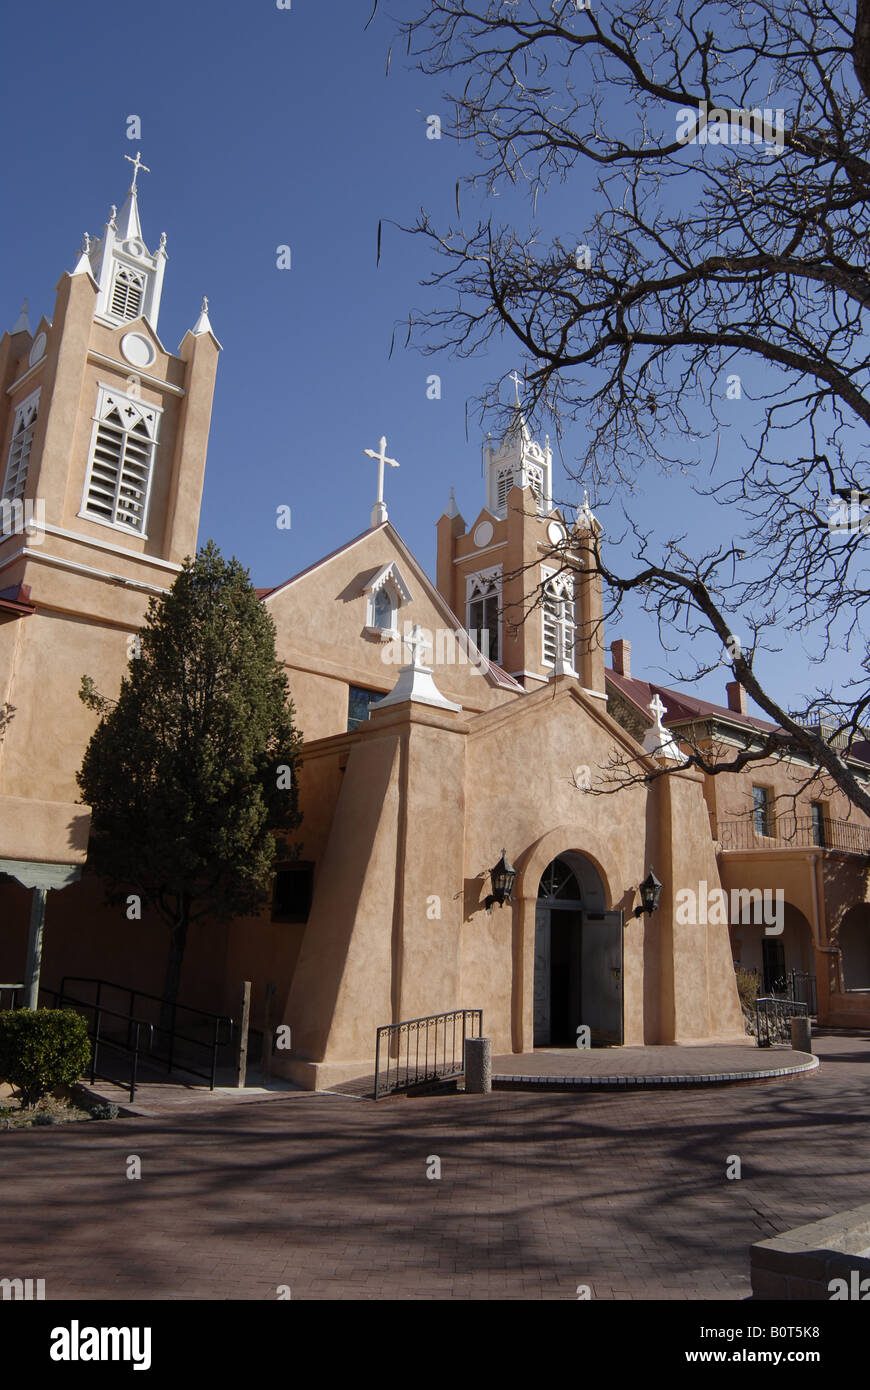 San Felipe de Neri Catholc Church stands in the Old Town area of Albuquerque New Mexico. Stock Photo